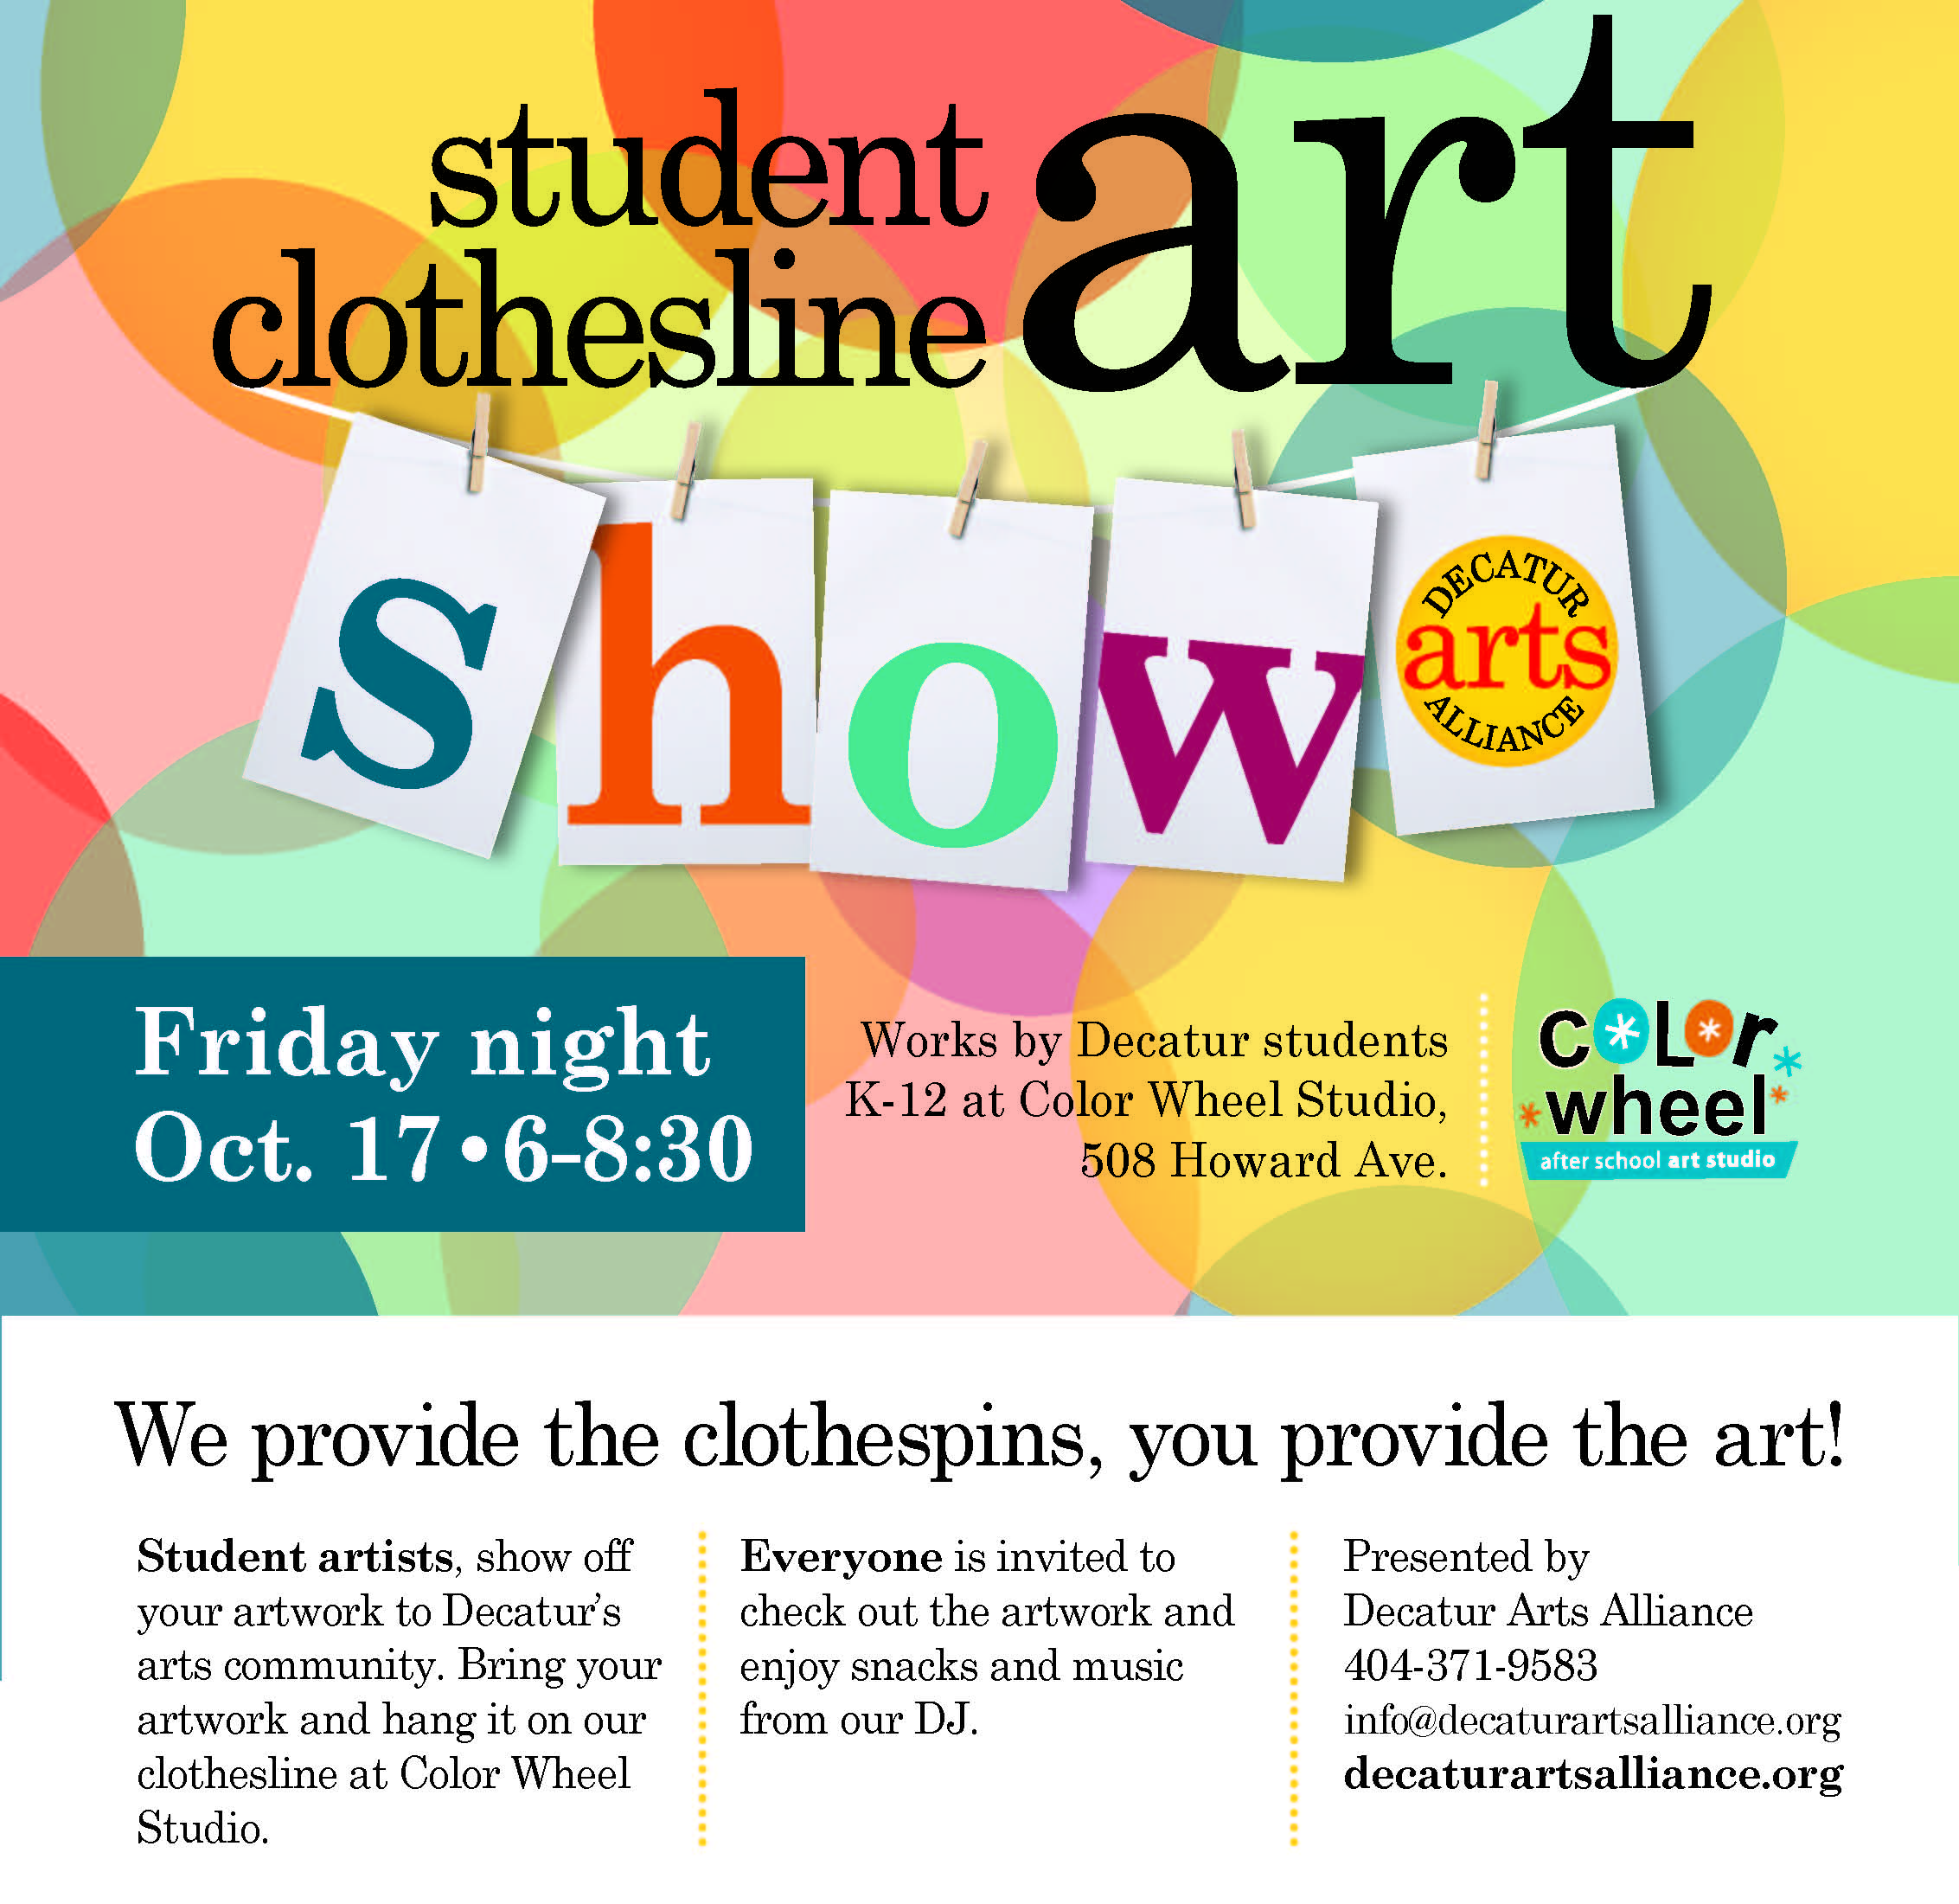 Student Clothesline Art Show Color Wheel Art Studio